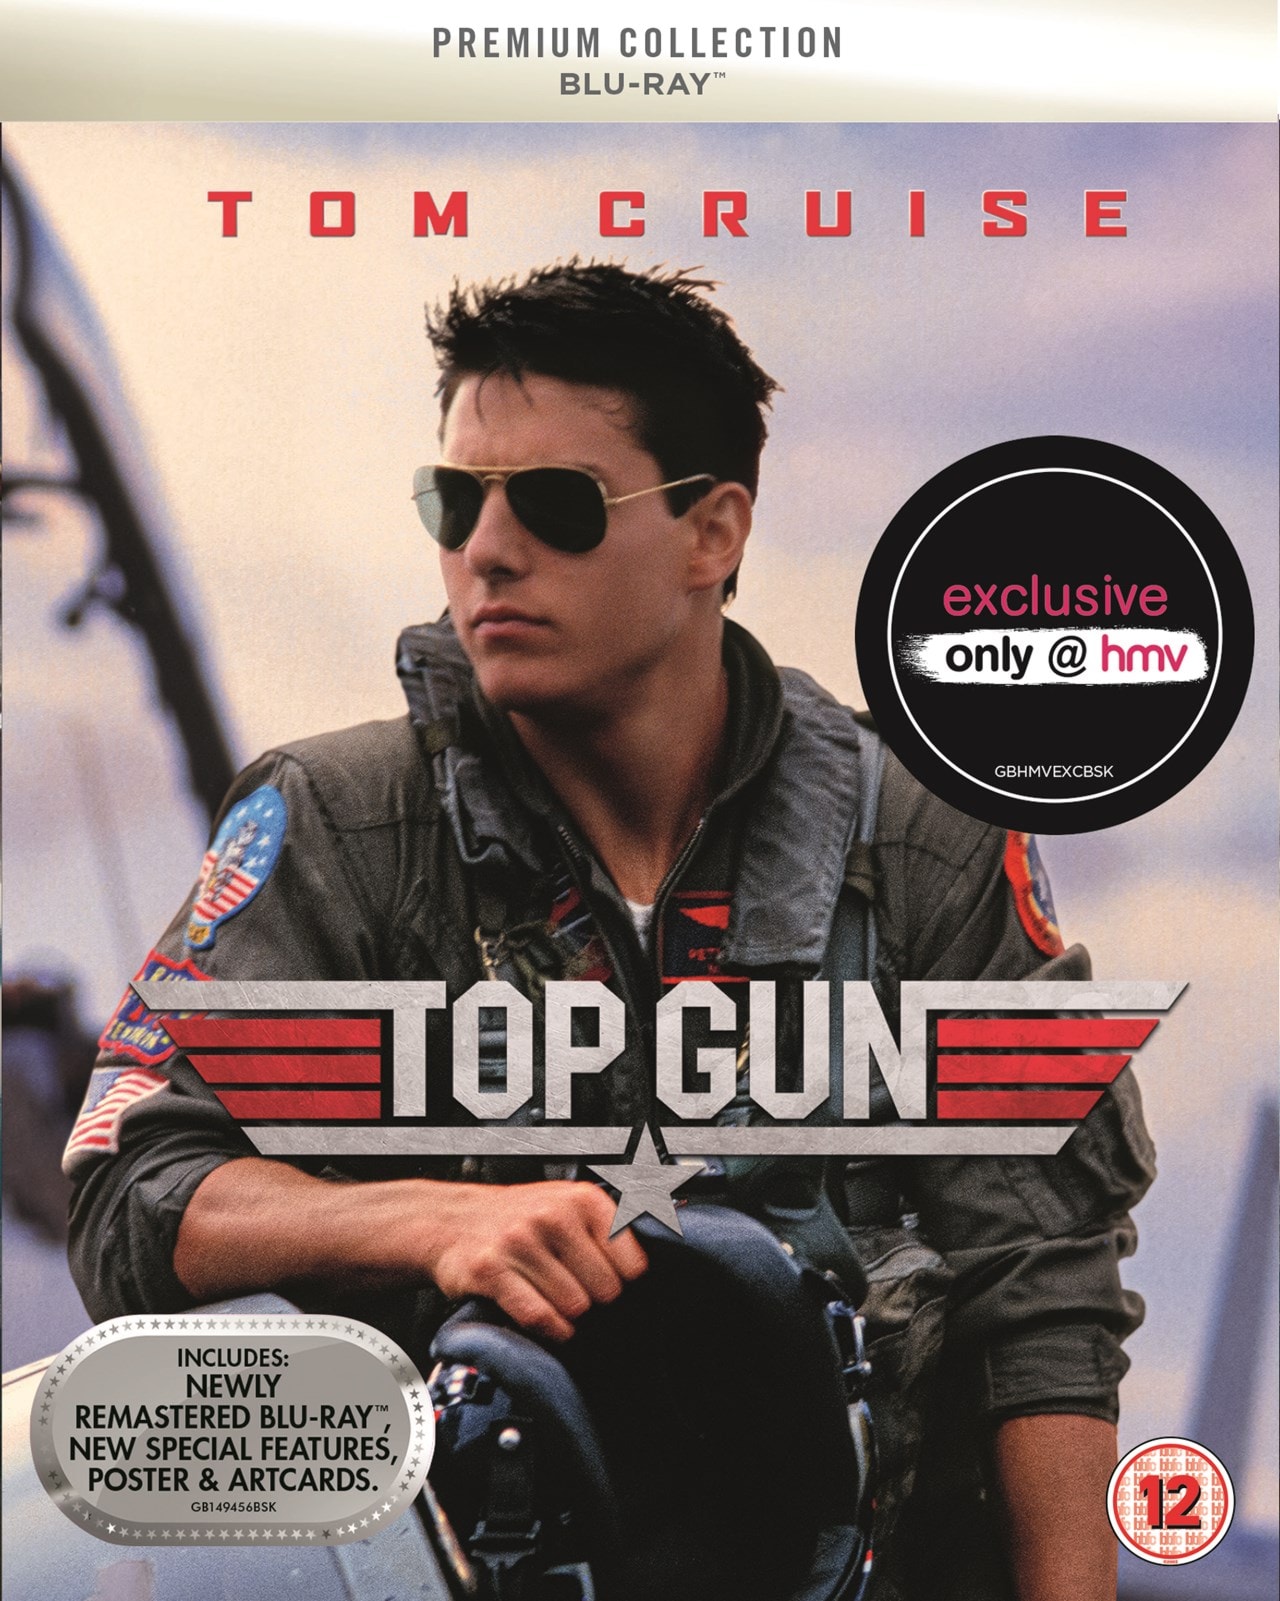 Top Gun Hmv Exclusive The Premium Collection Blu Ray Free Shipping Over Hmv Store